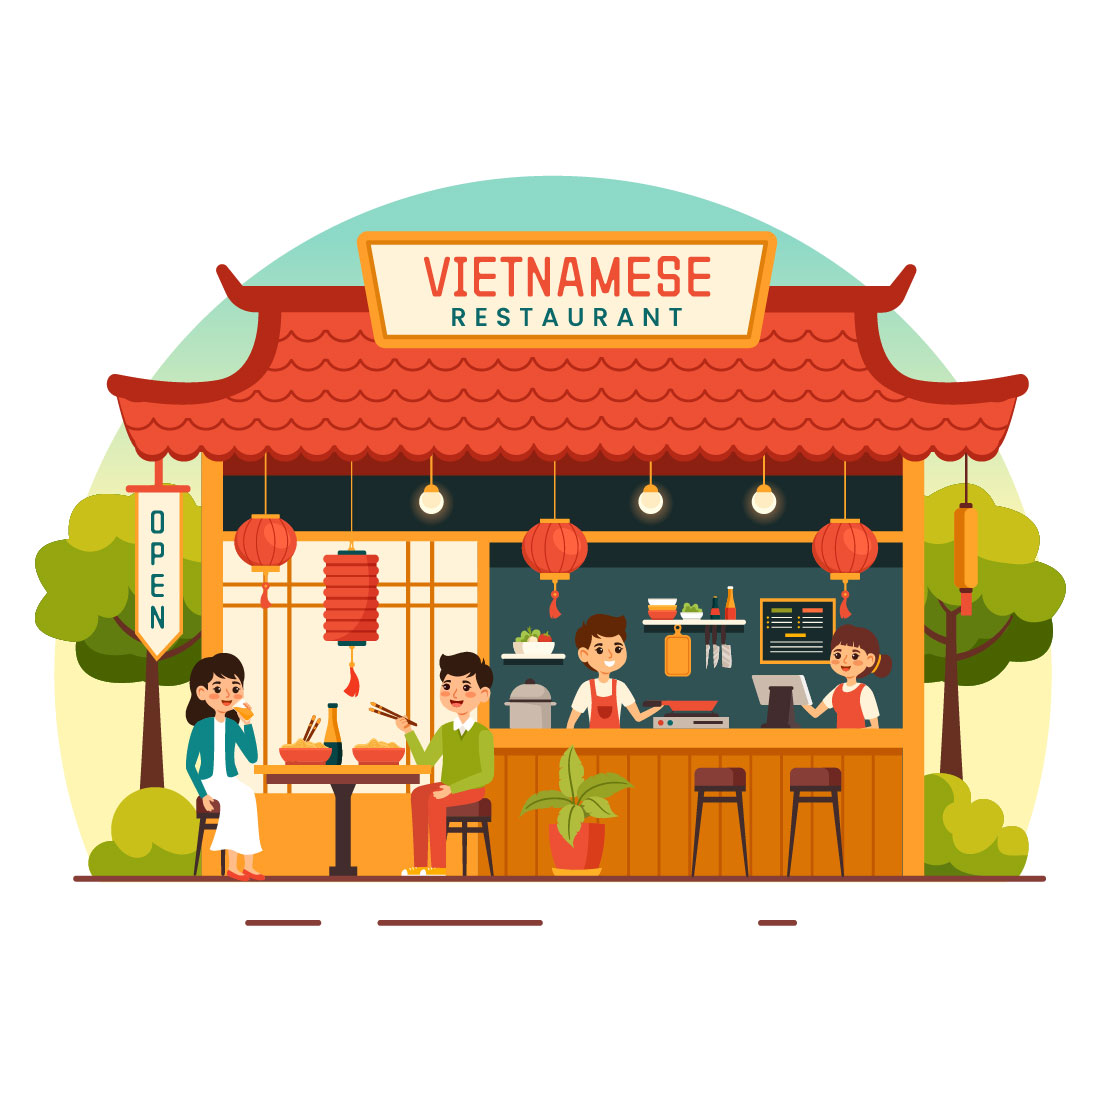 10 Vietnamese Food Restaurant Illustration cover image.